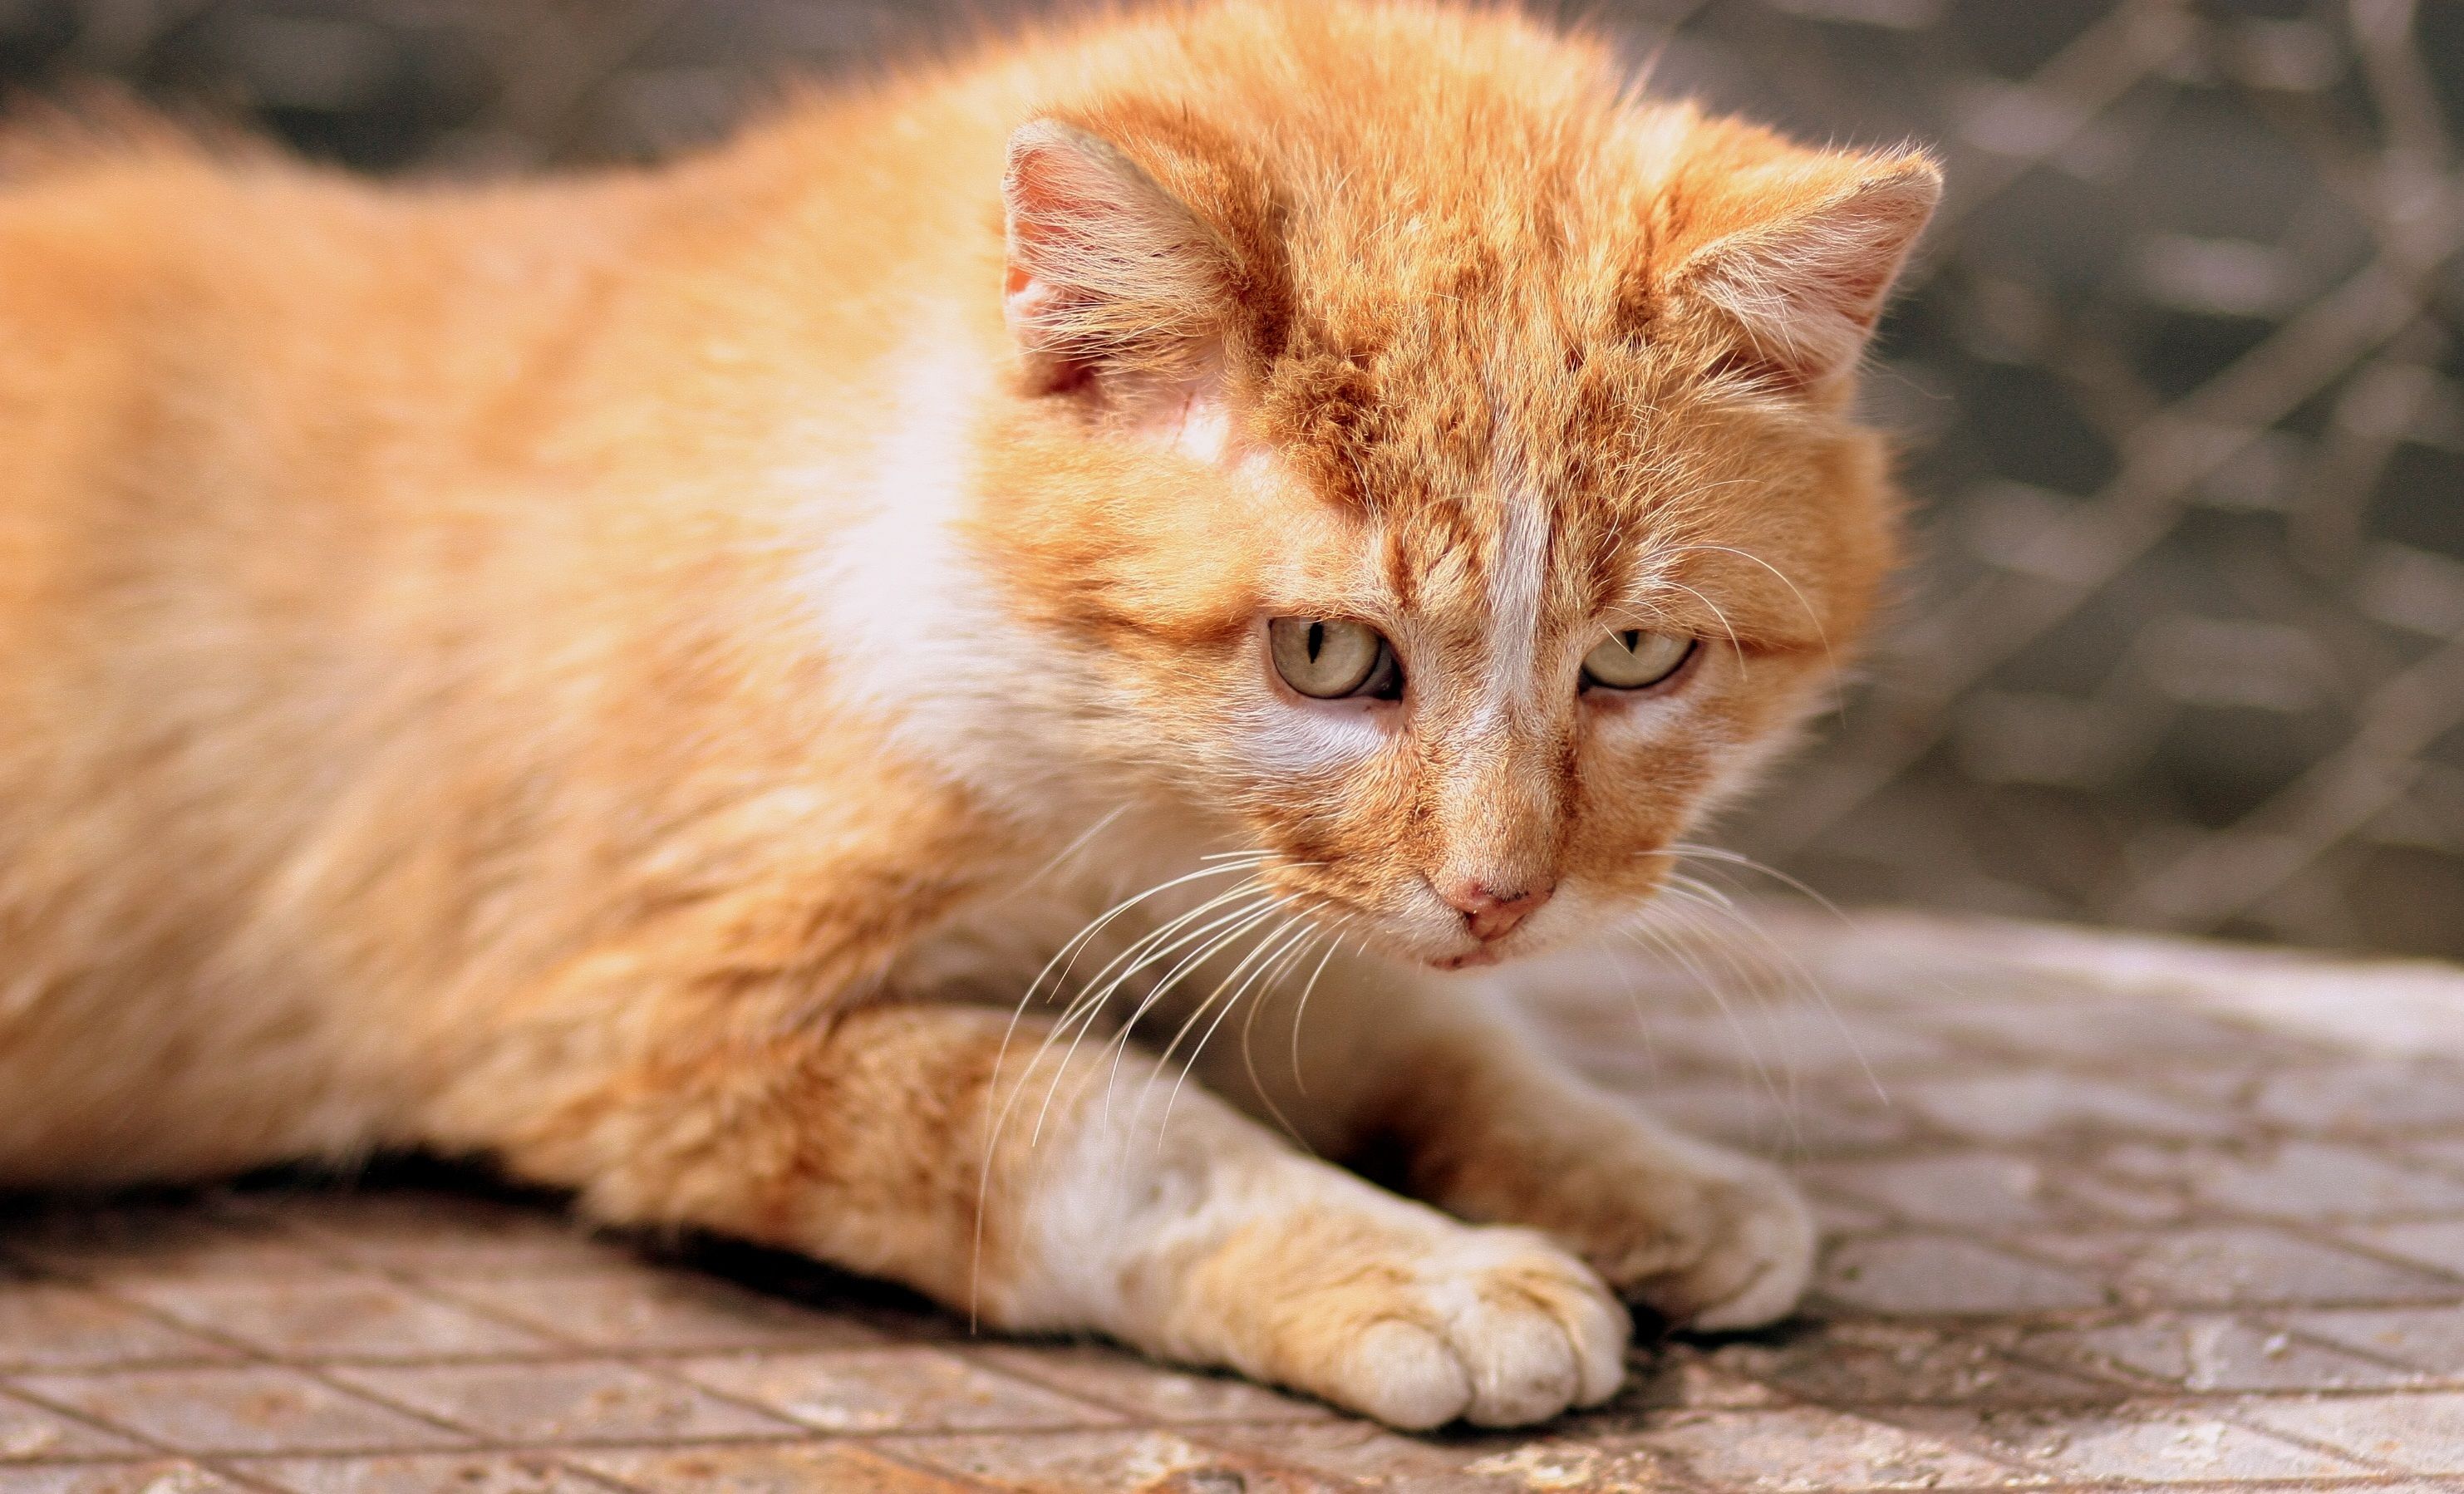 ginger cat, kitten, eyes Wallpaper, HD Animals 4K Wallpaper, Image, Photo and Background